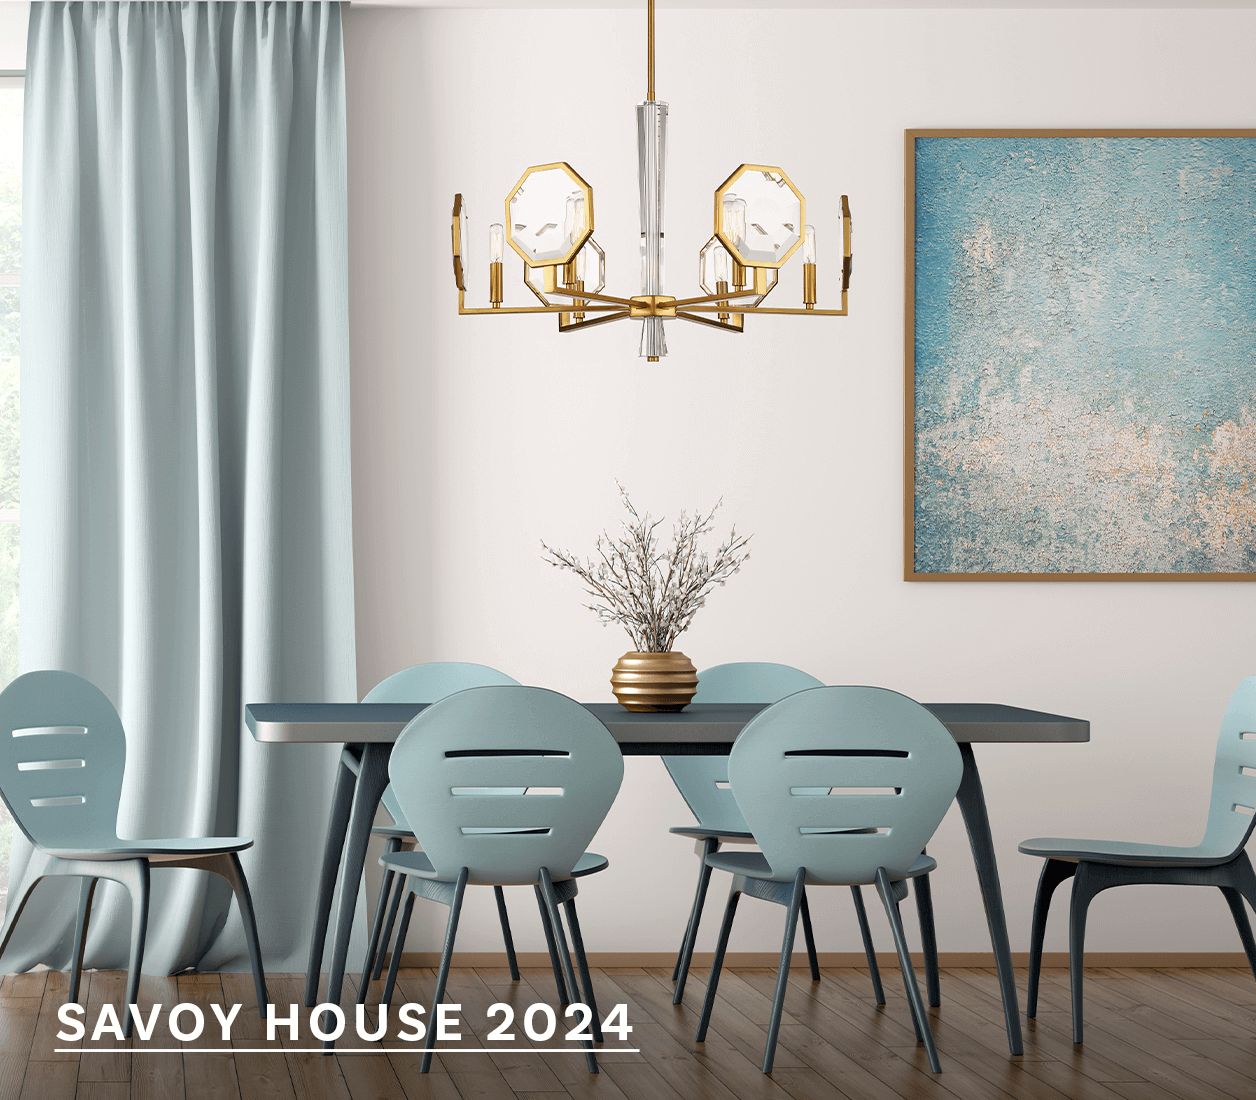 Savoy House 2024